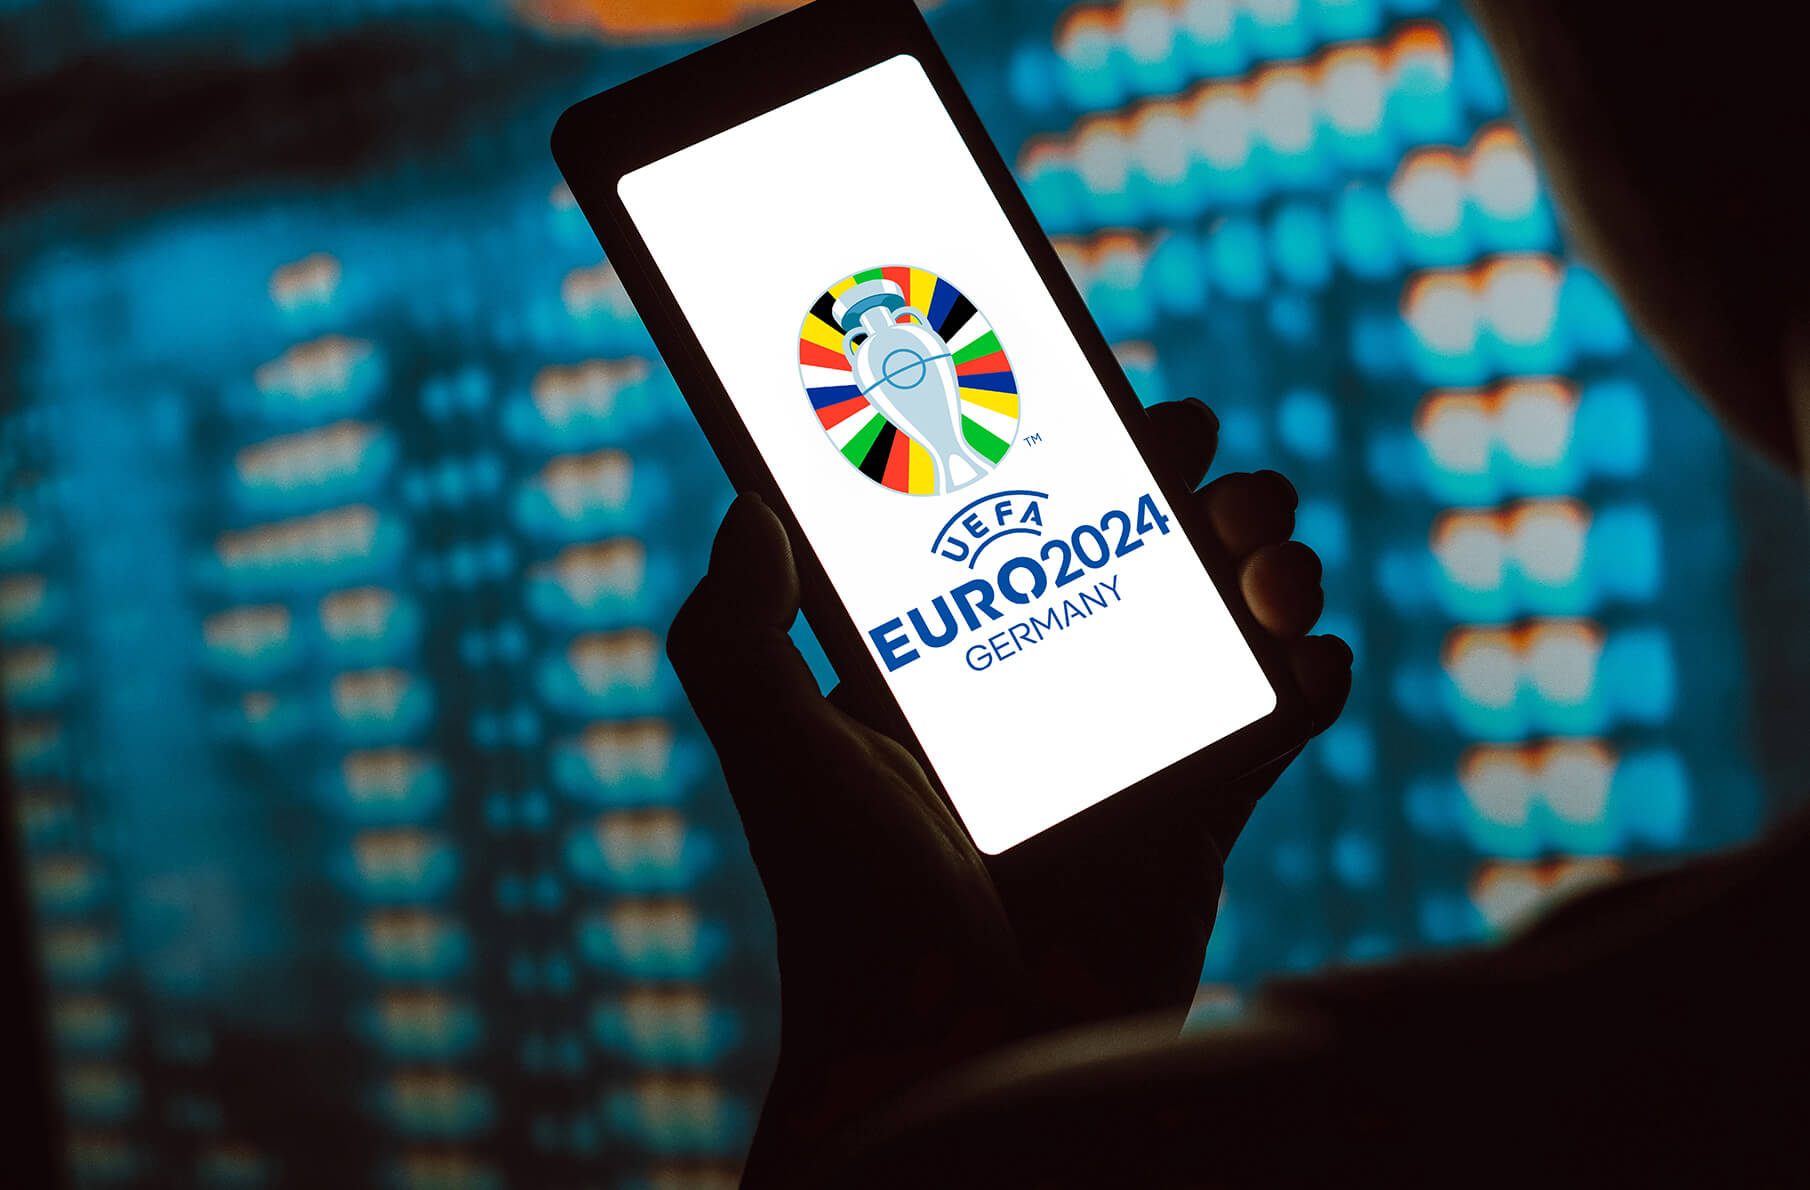 The UEFA European Football Championship logo is displayed on a smartphone screen. UEFA European Football Championship (Euro 2024 Germany) it is the main football championship between men's teams from European countries belonging to UEFA. 